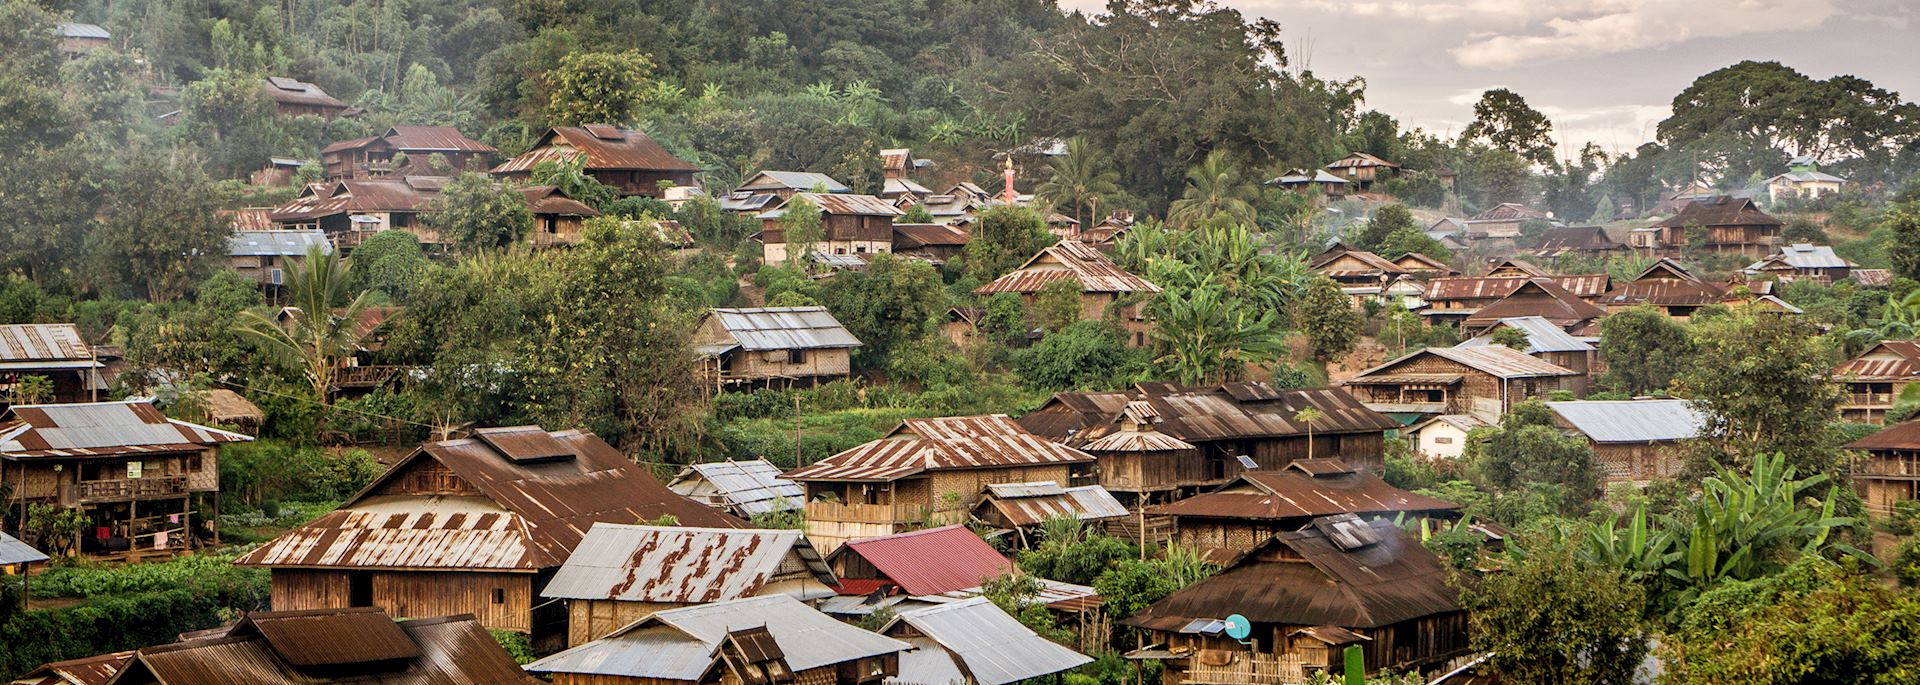 Shan village near Hsipaw